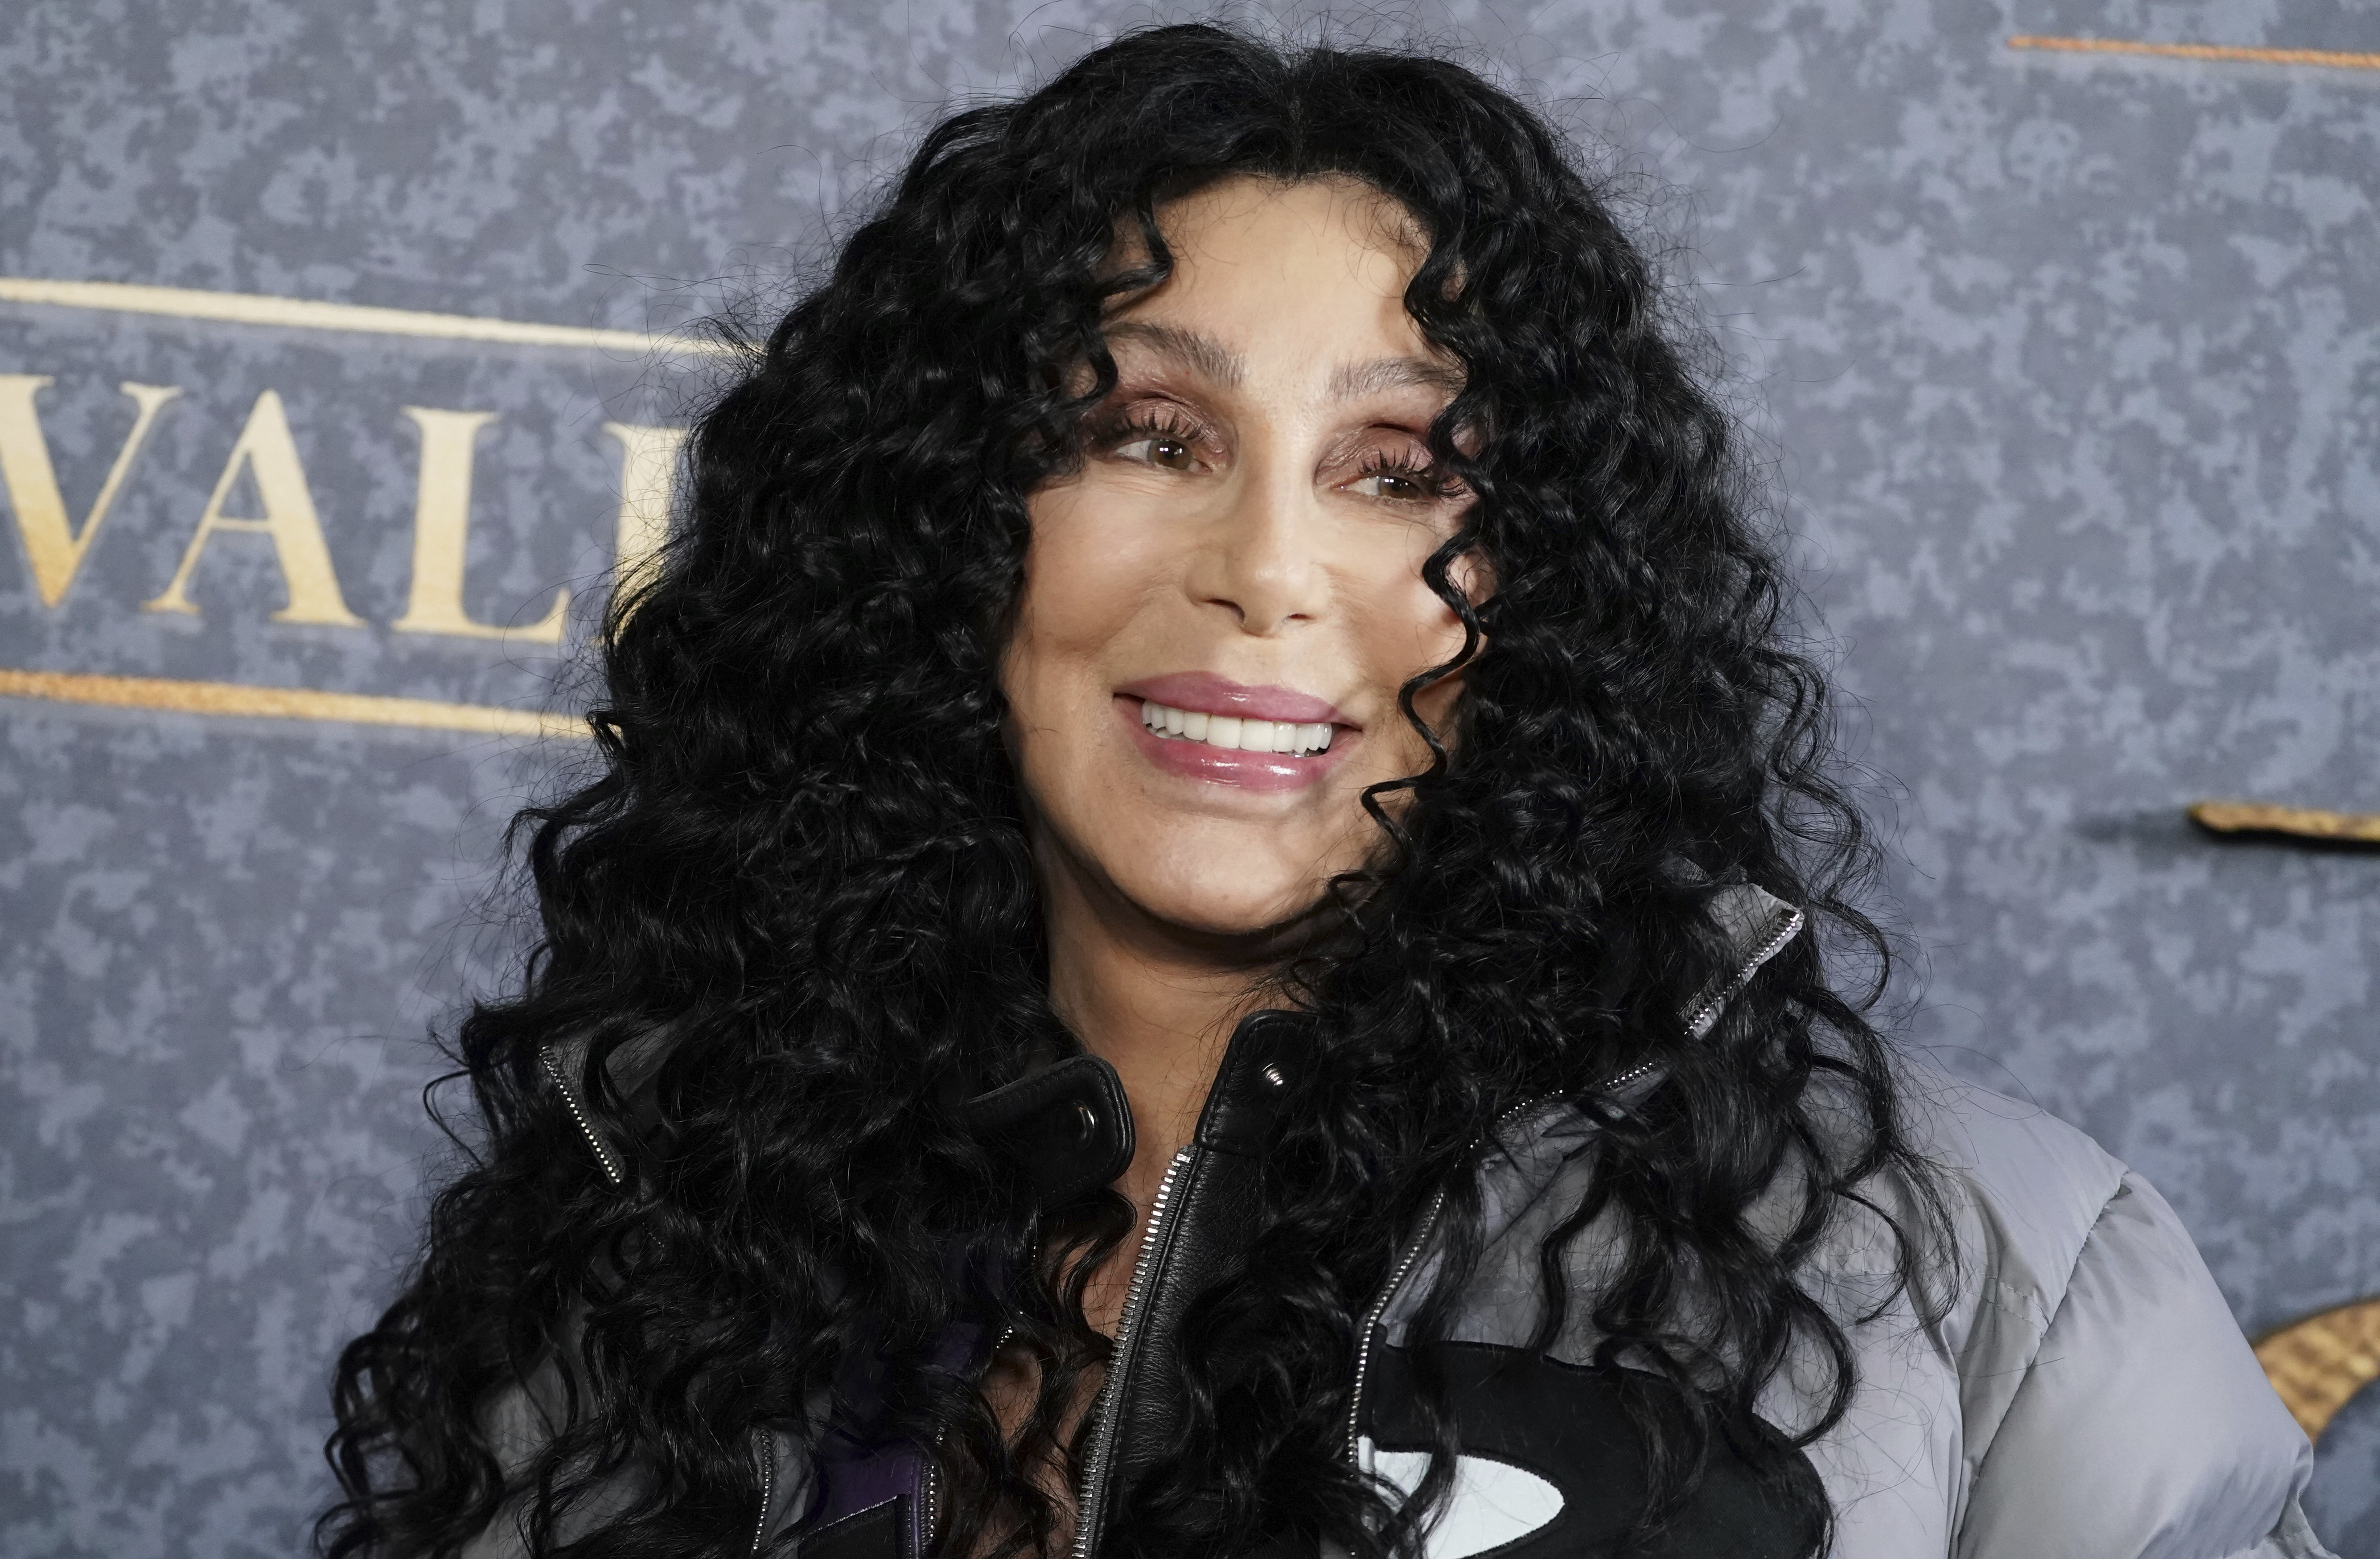 Hoeveel verdiende Cher met haar wereldhit Believe?